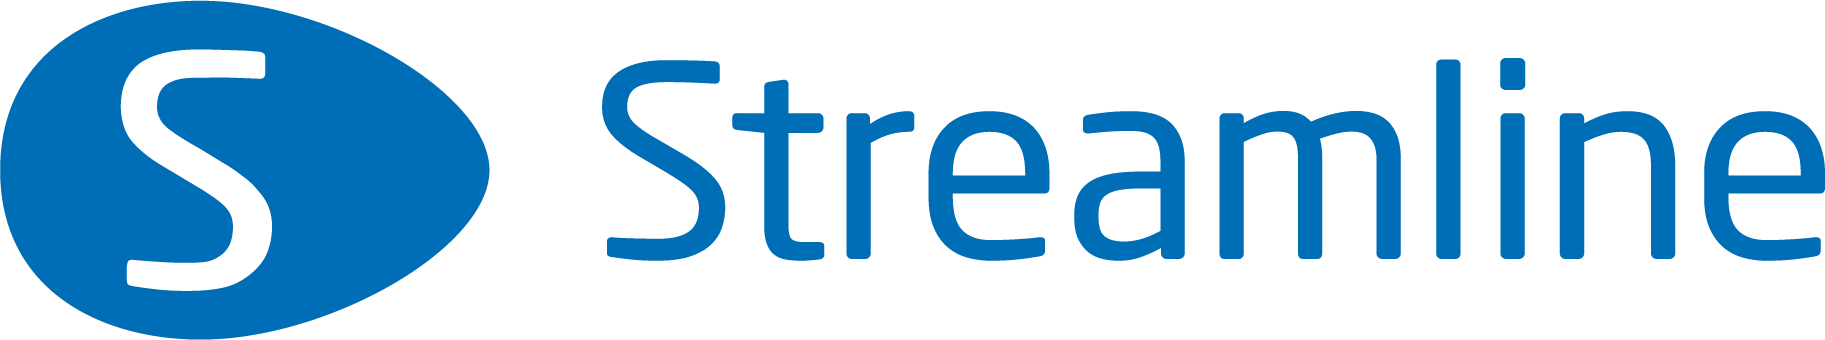 Streamline-Logo blau